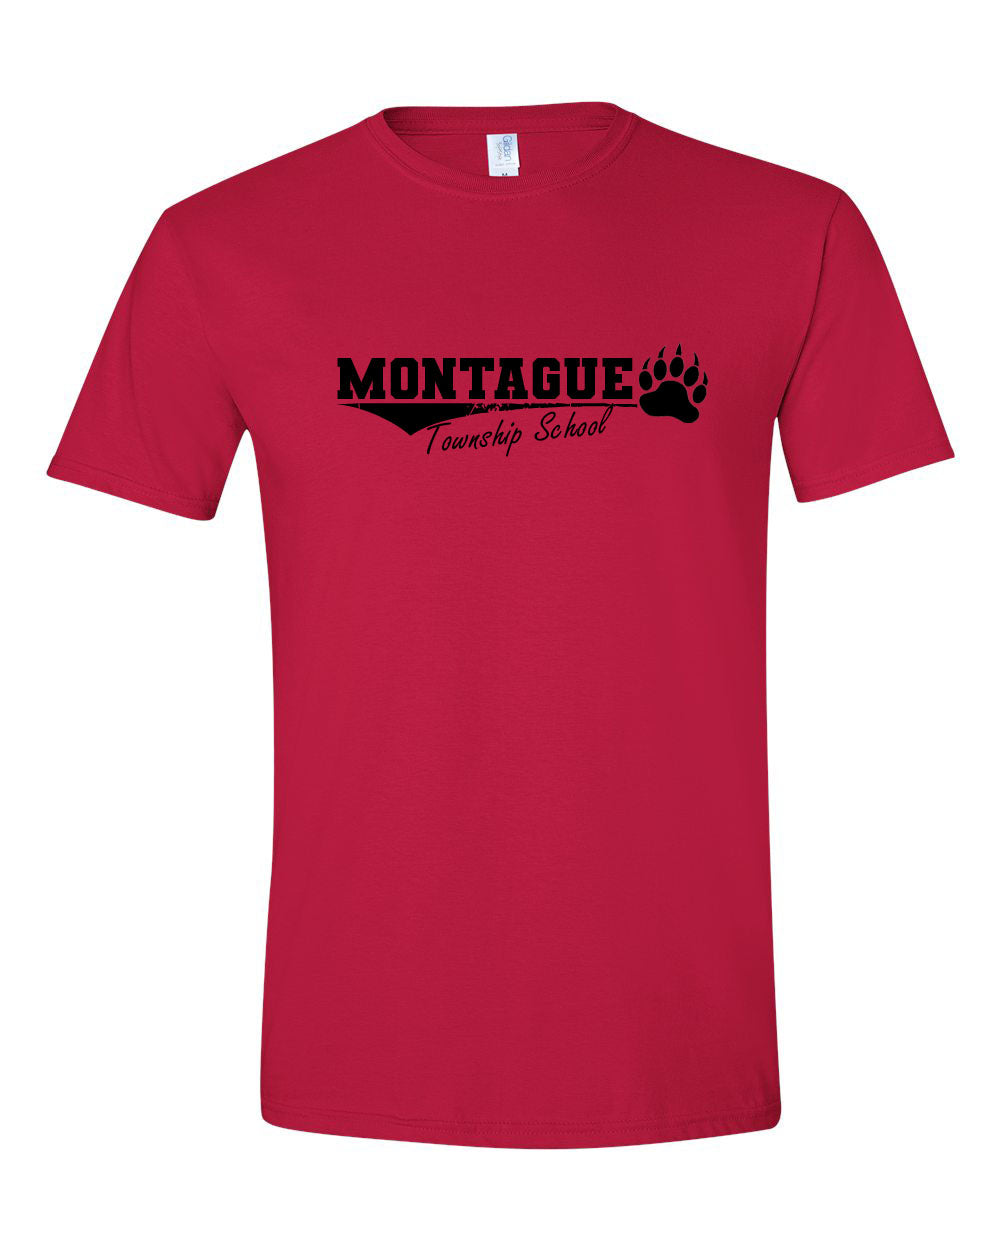 Montague design 1 T-Shirt